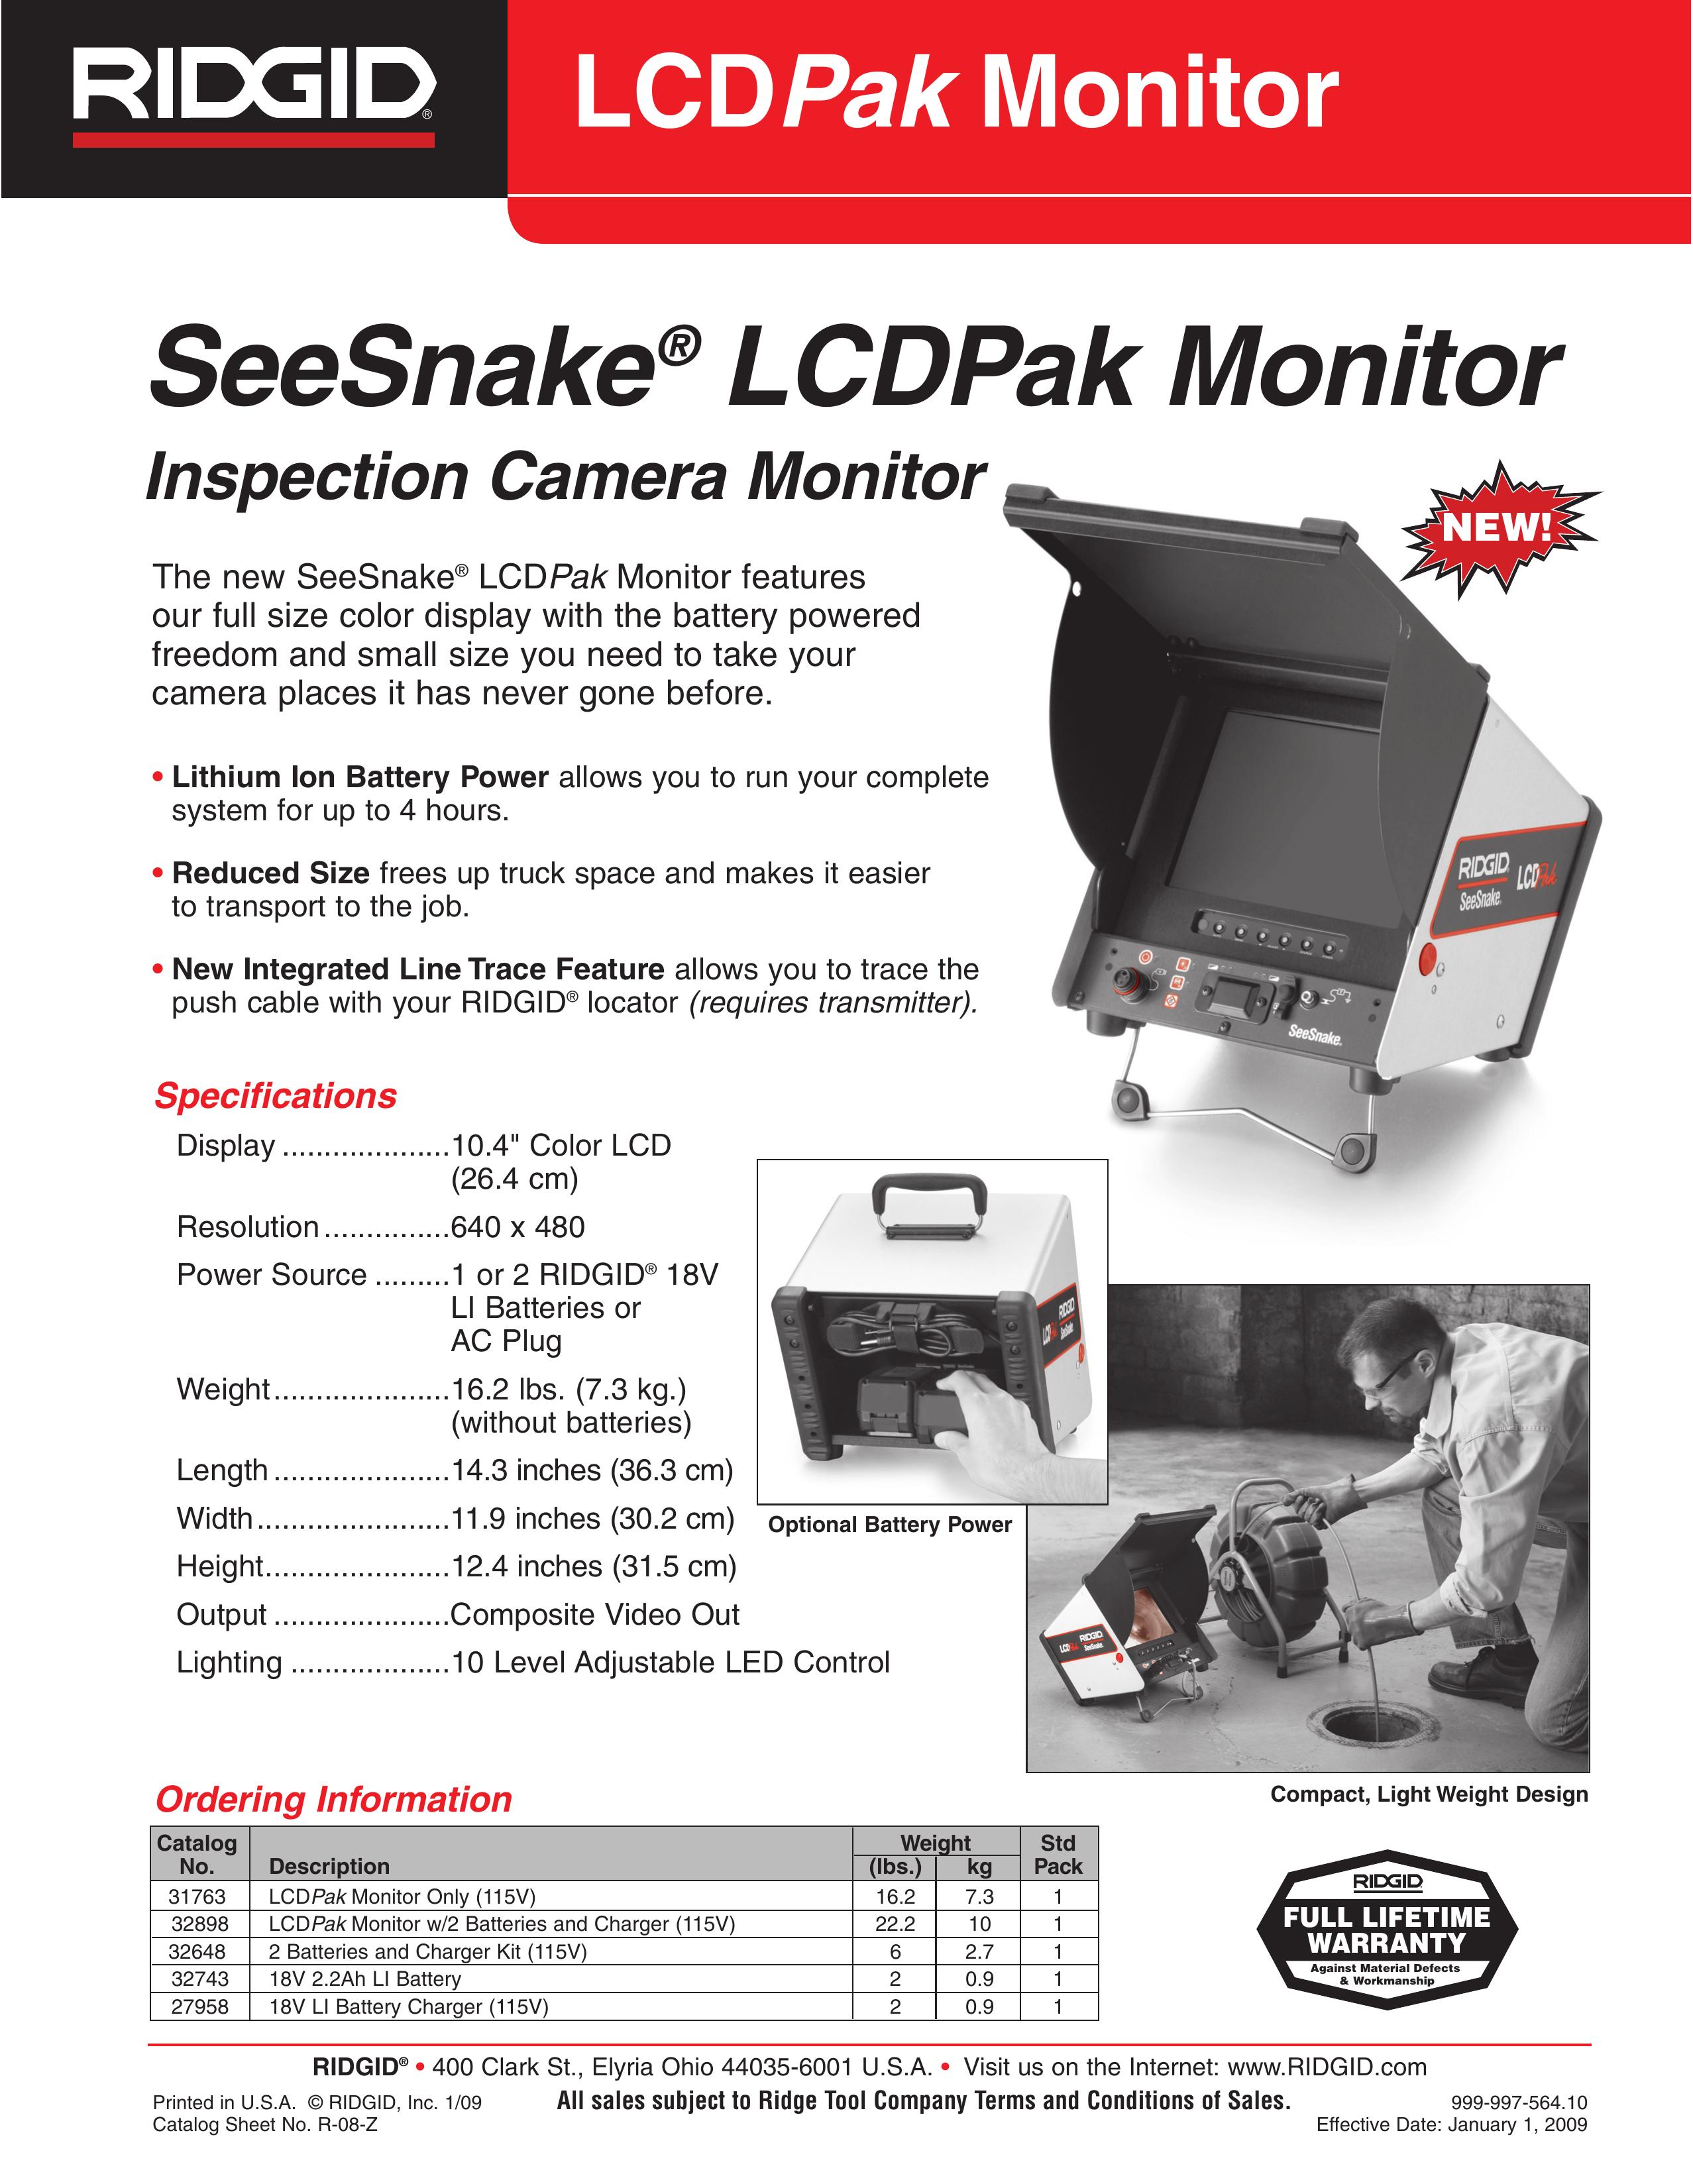 RIDGID SeeSnake LCDPak Monitor Security Camera User Manual